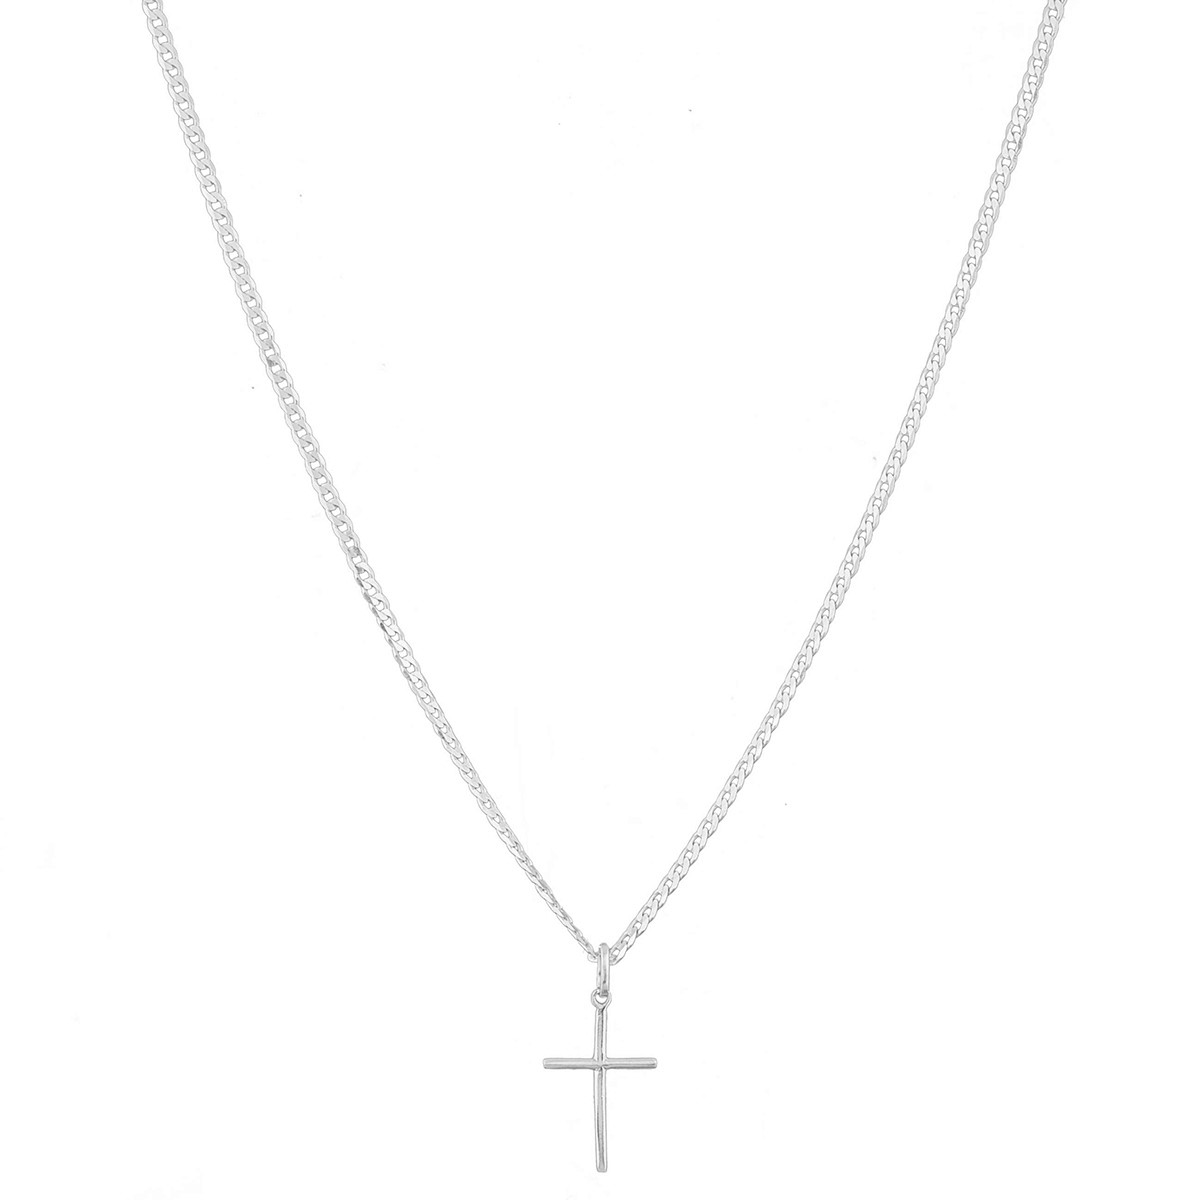 Cordão Corrente Masculina Grumet 60cm Pingente Crucifixo De Prata 925